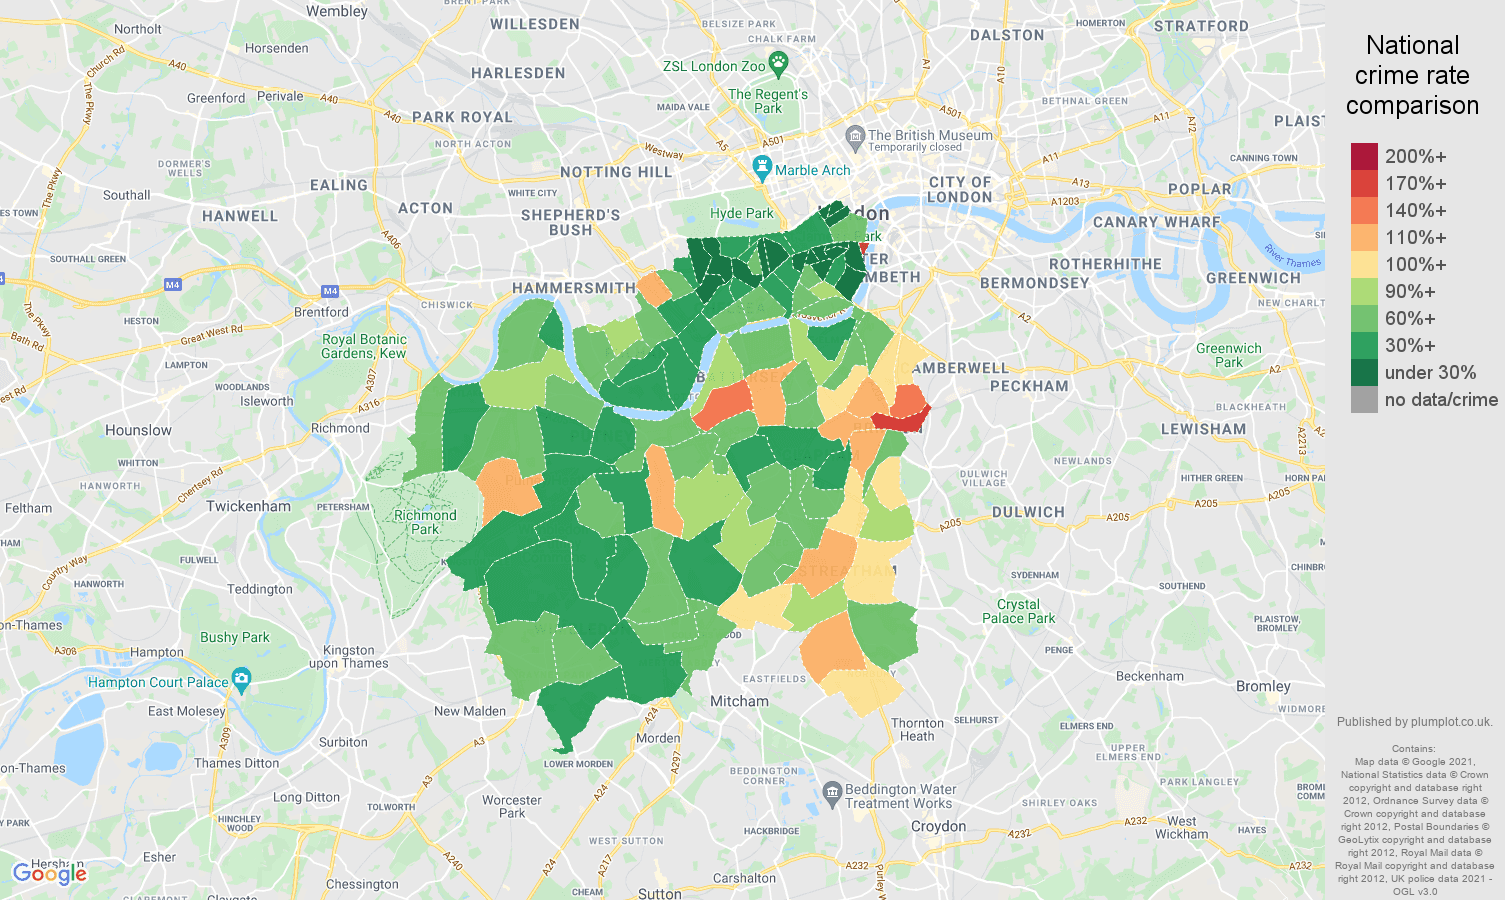 South West London criminal damage and arson crime rate comparison map